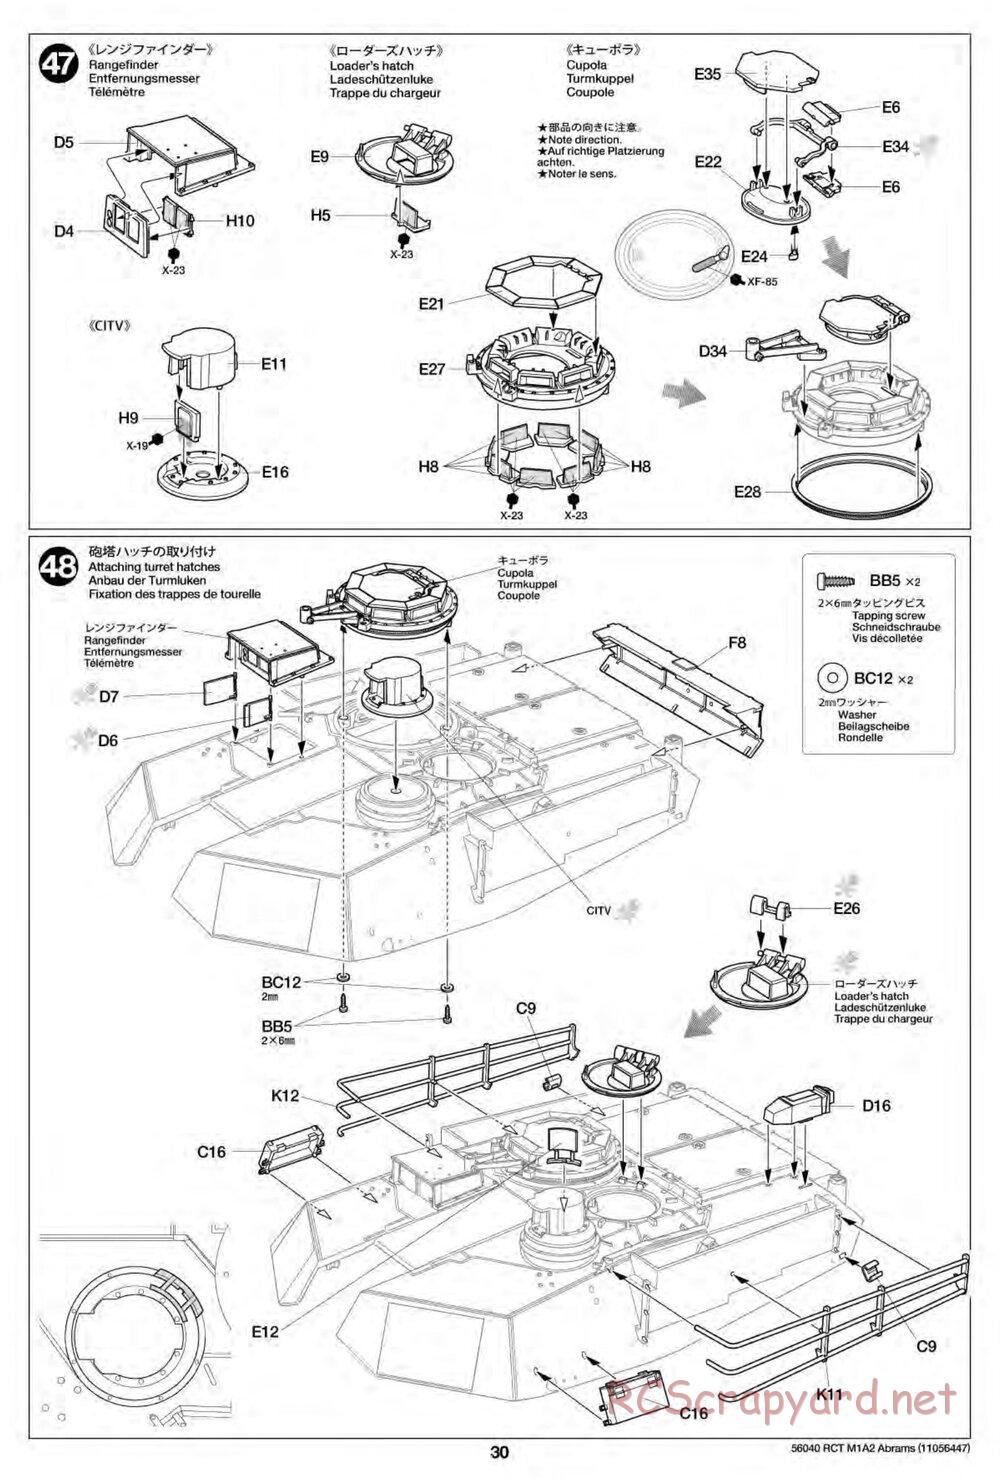 Tamiya - U.S. Main Battle Tank M1A2 Abrams - 1/16 Scale Chassis - Manual - Page 30